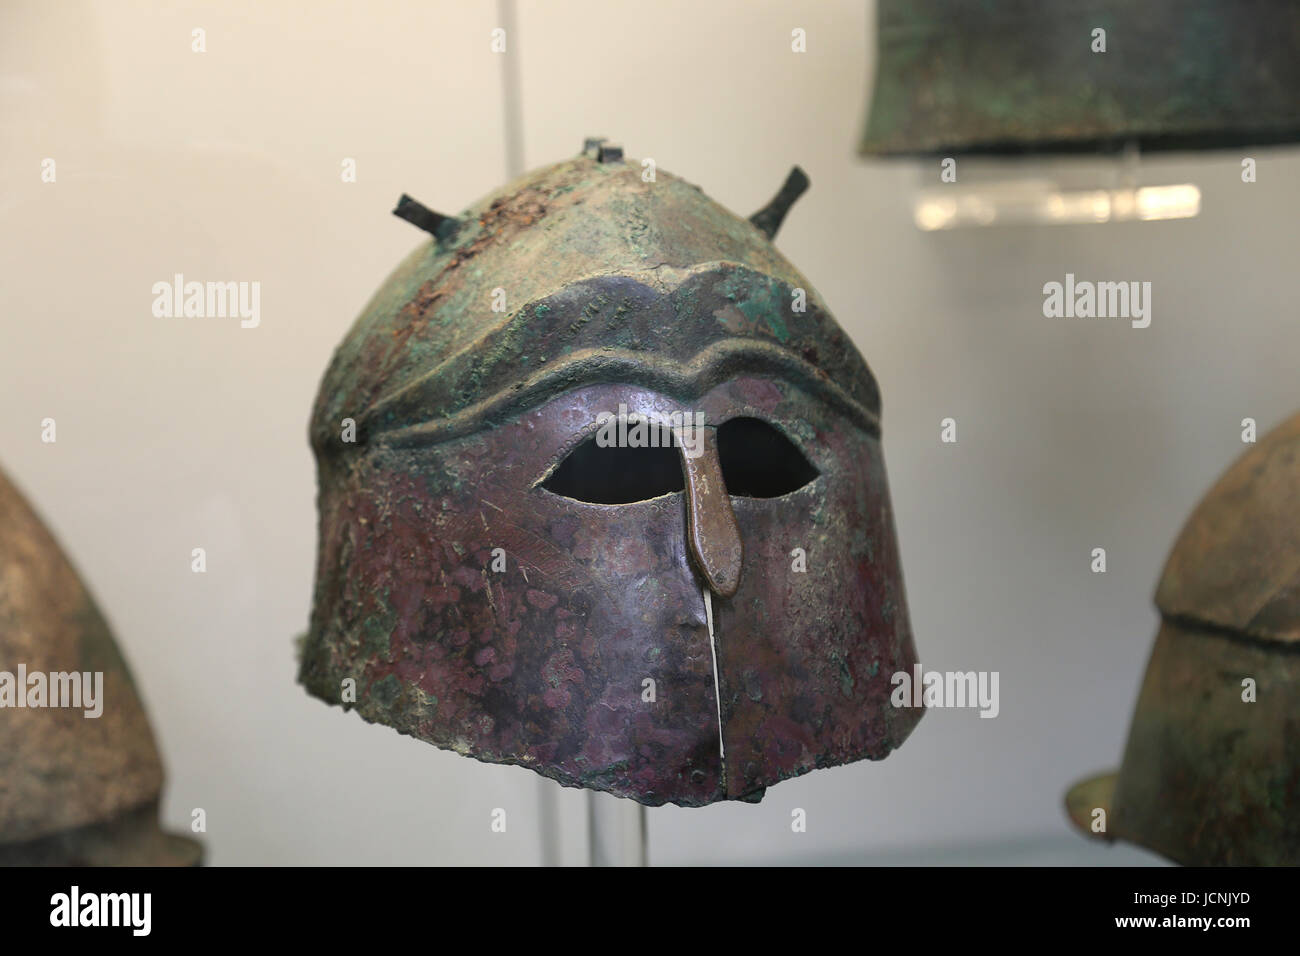 Apulo corintian casque. 400-350 BC. De Ruvo, Pouilles, Italie. British Museum. Londres. UK. Banque D'Images